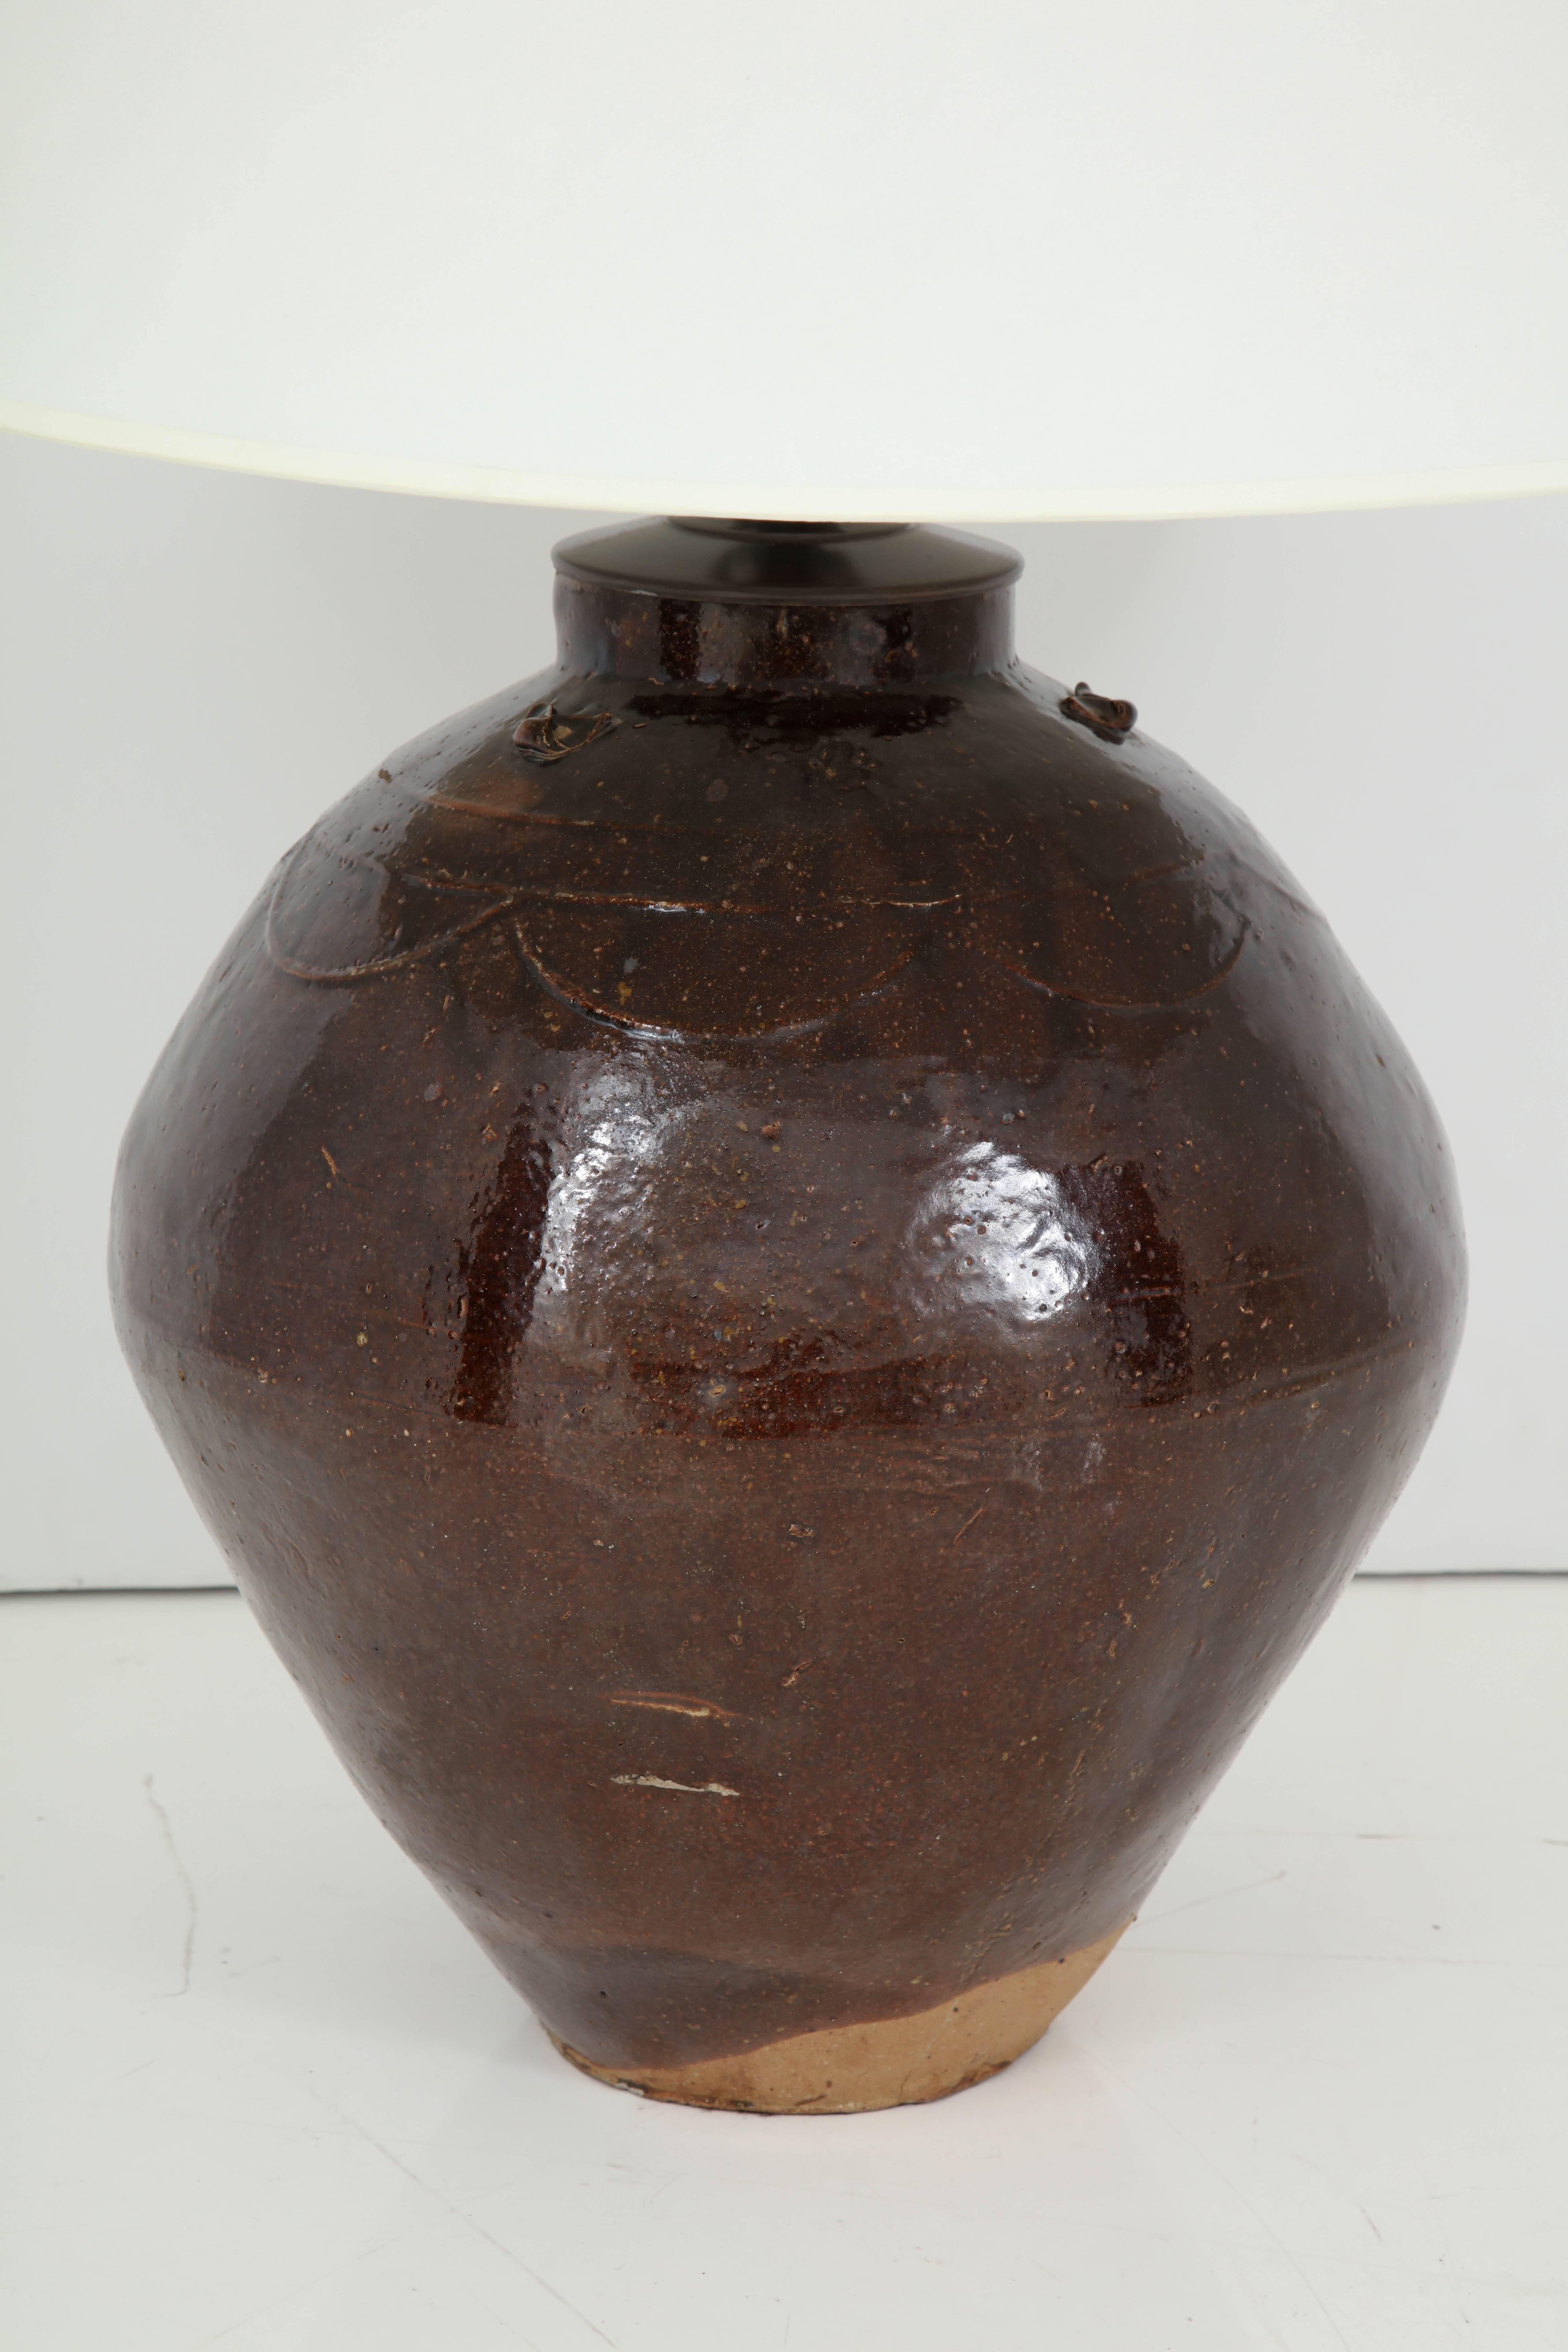 Late 19th century brown glazed terracotta wine vessel lamp.